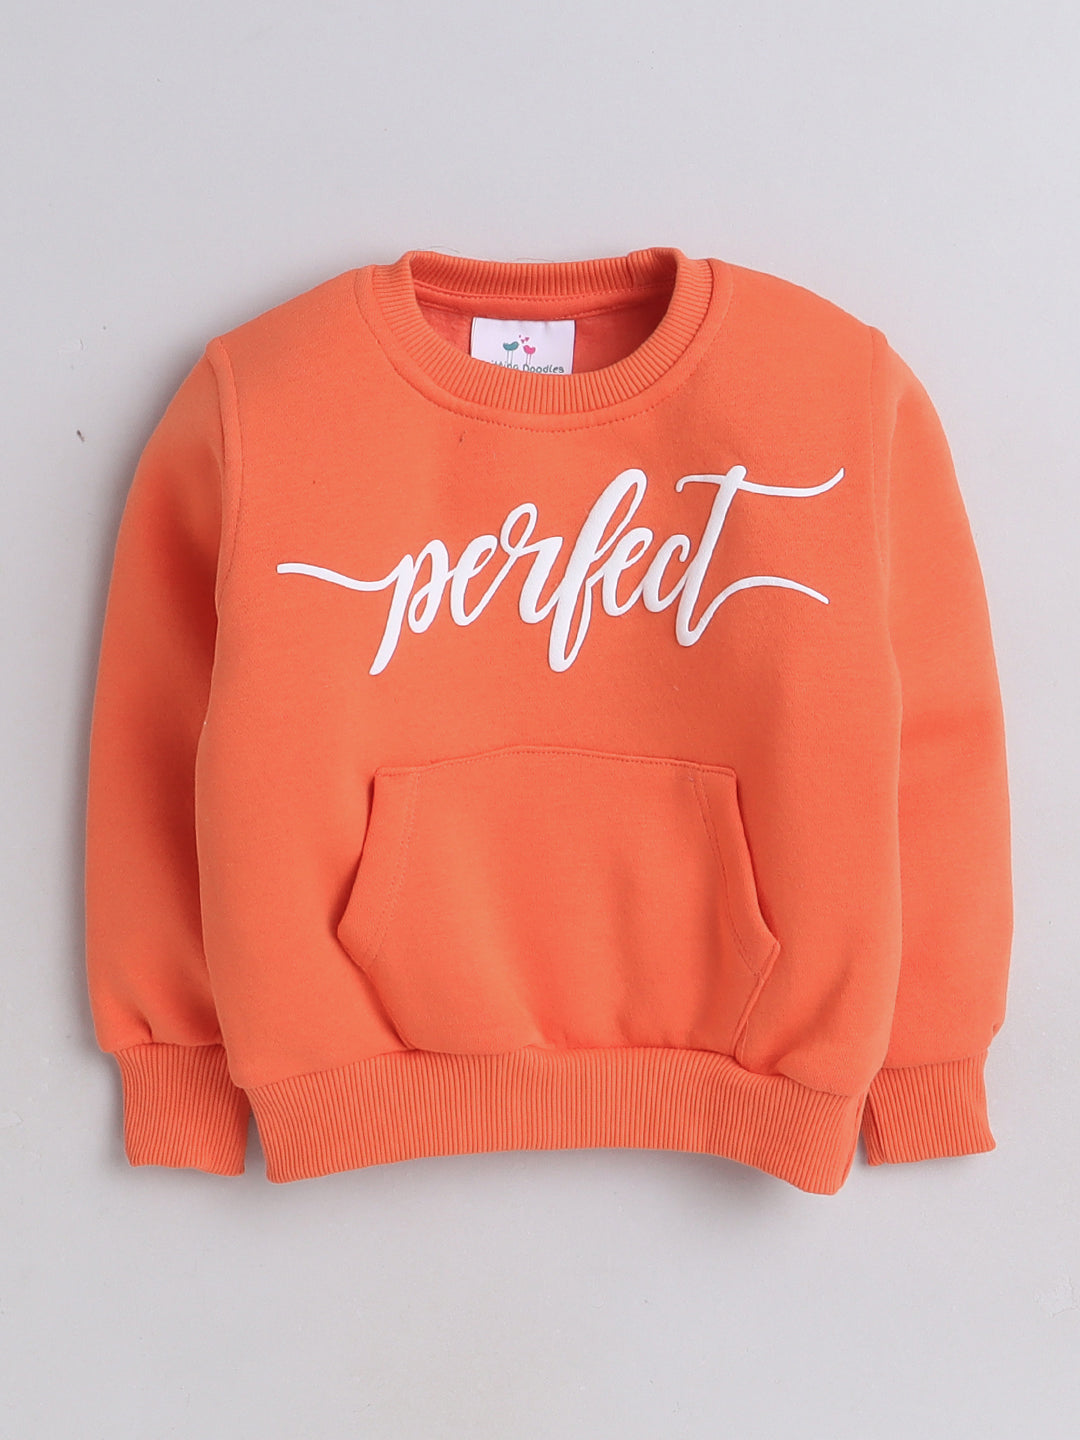 Knitting Doodles Kids' Sweat Shirt with Warm Fleece and Smart Perfect Puff Print- Orange